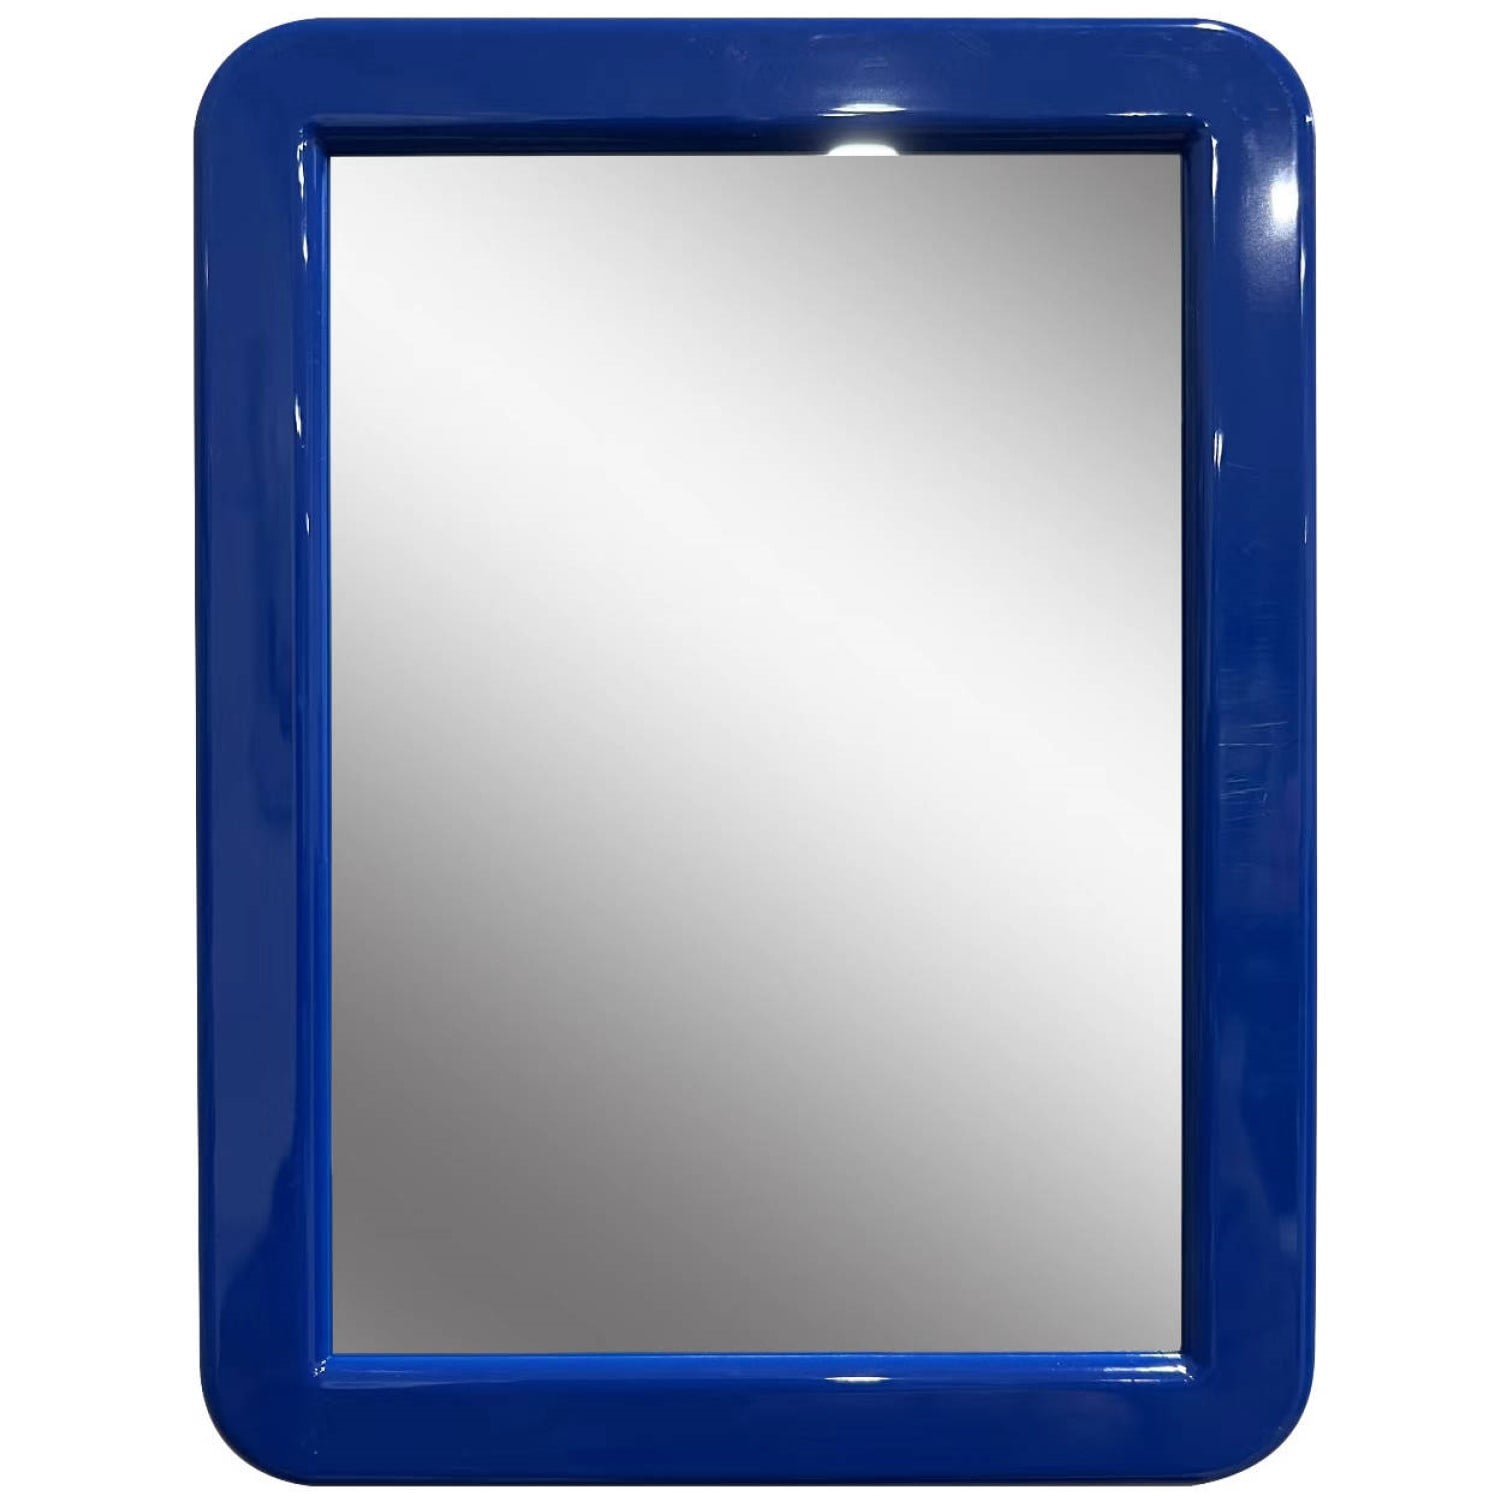 Luxury Designer Mirror for Walls - Magnet – Flair Glass